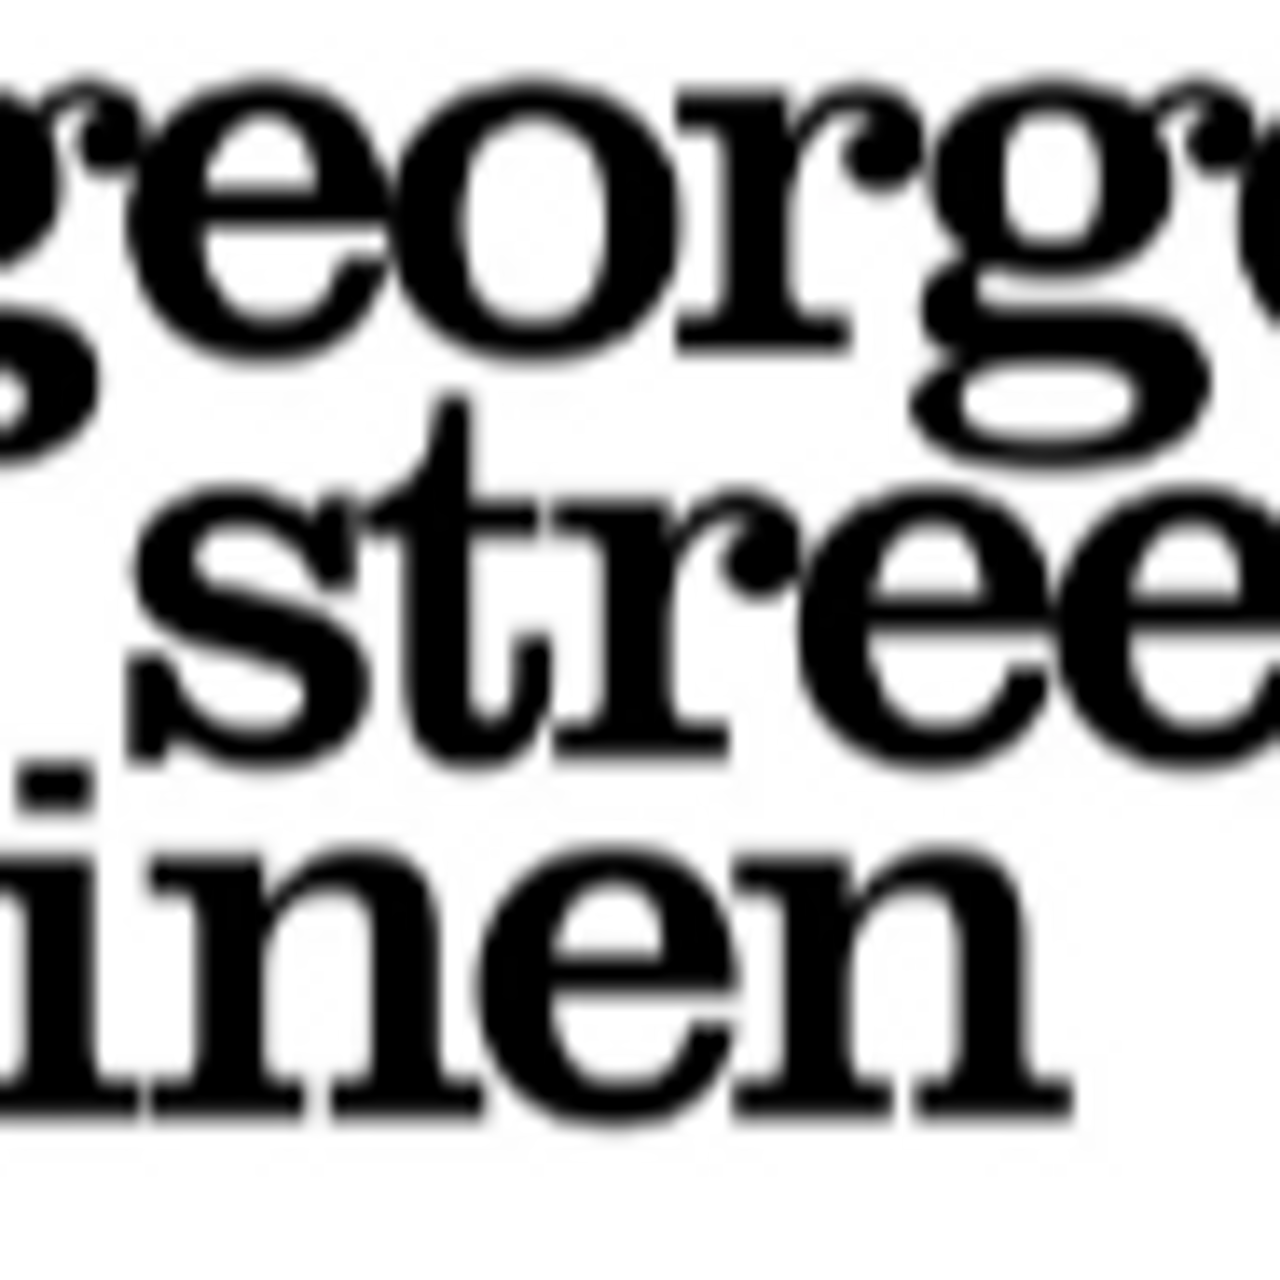 GeorgeStreet